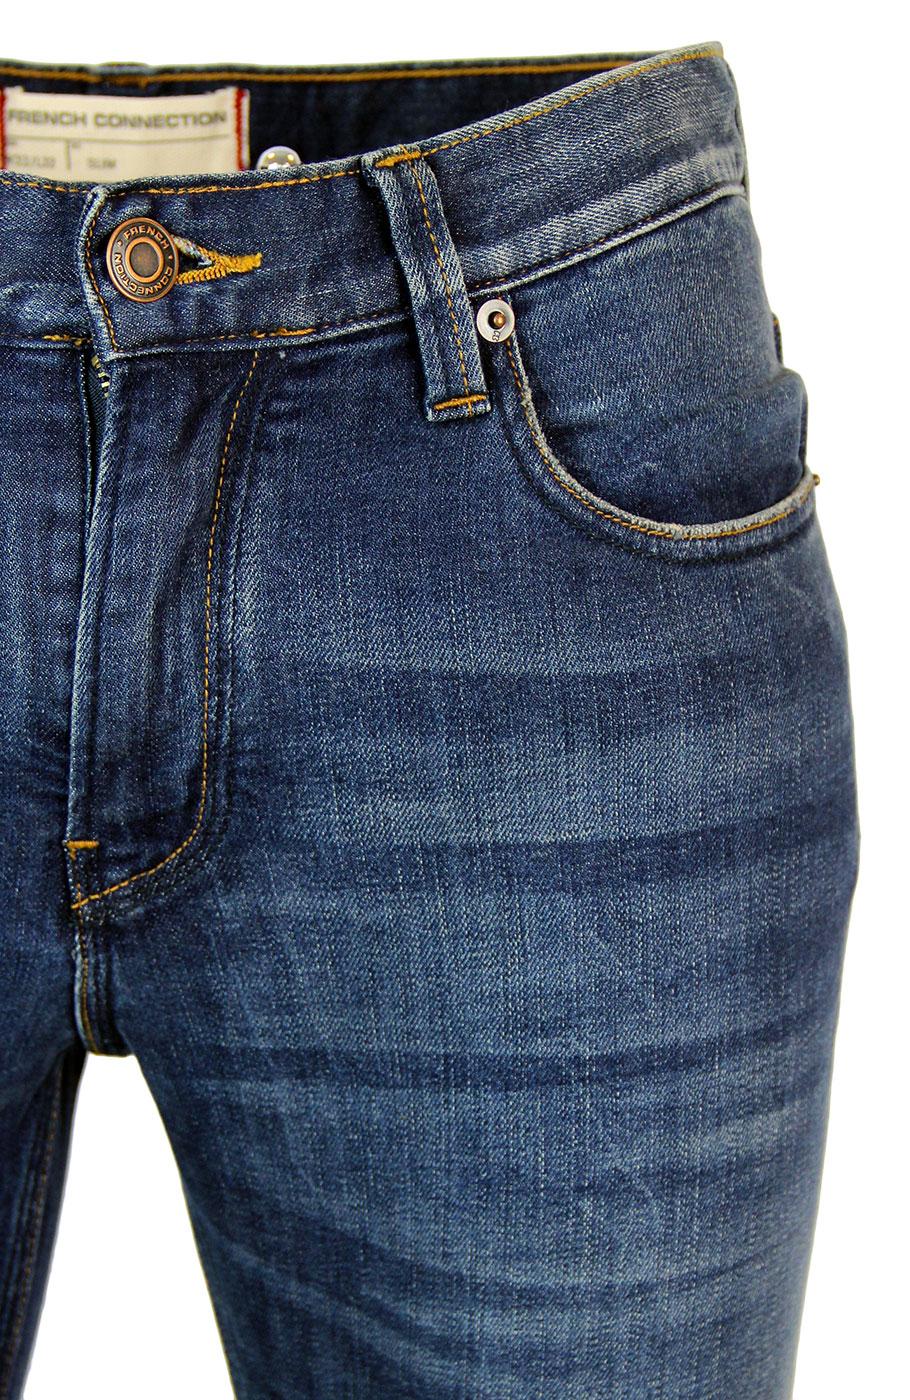 FRENCH CONNECTION DU Denim Retro Mod Regular Jeans Vintage Wash